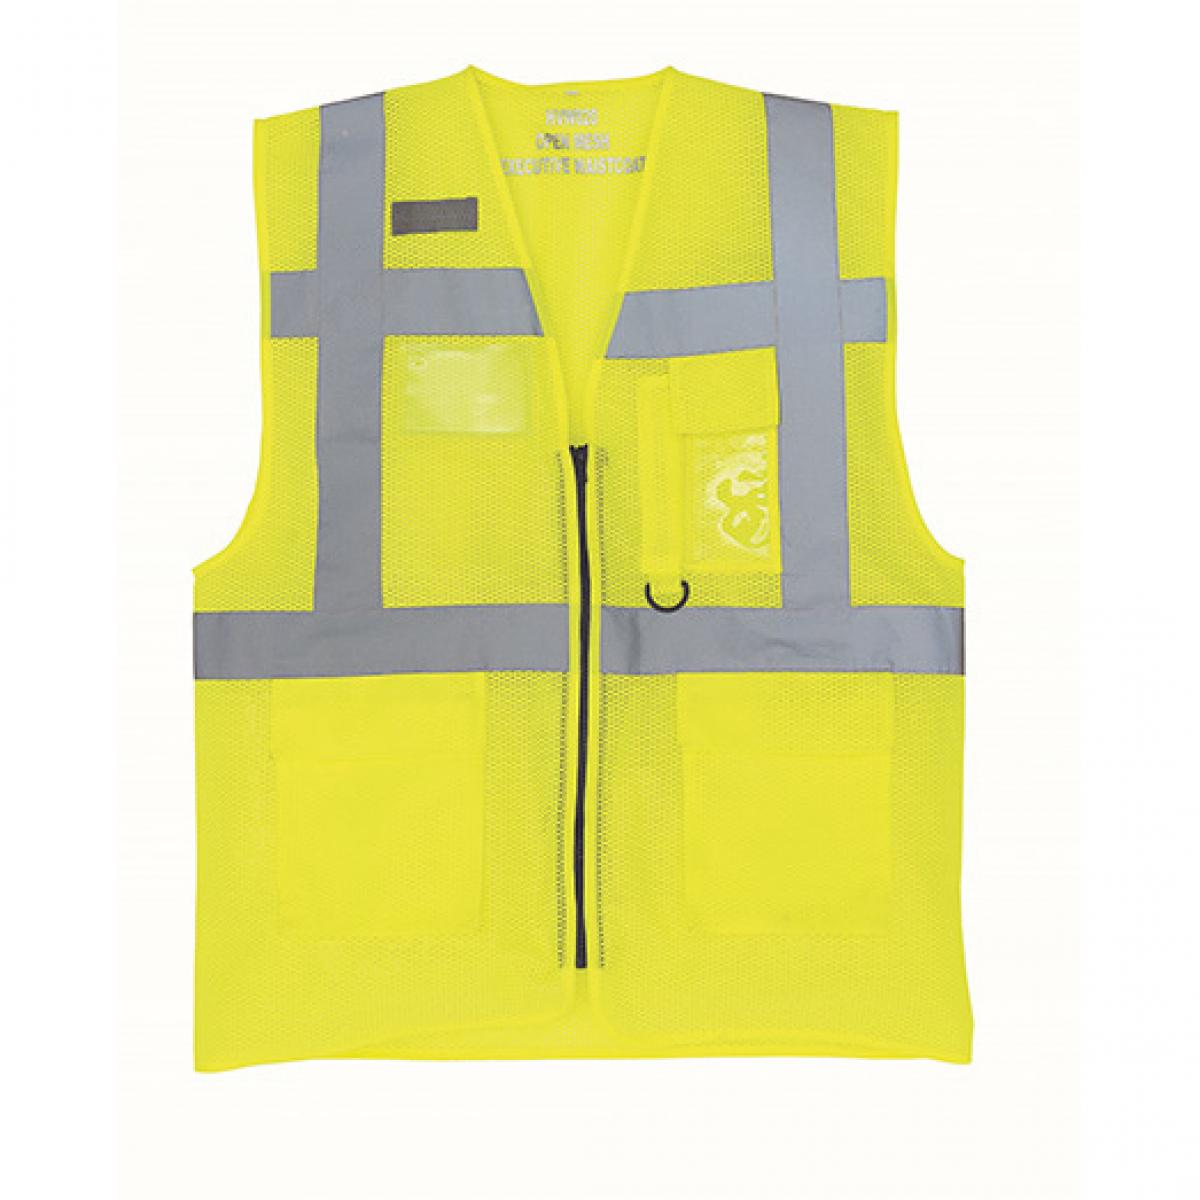 Hersteller: YOKO Herstellernummer: HVW820 Artikelbezeichnung: Herren Hi Vis Top Cool Open Mesh Executive Waistcoat Farbe: Hi-Vis Yellow